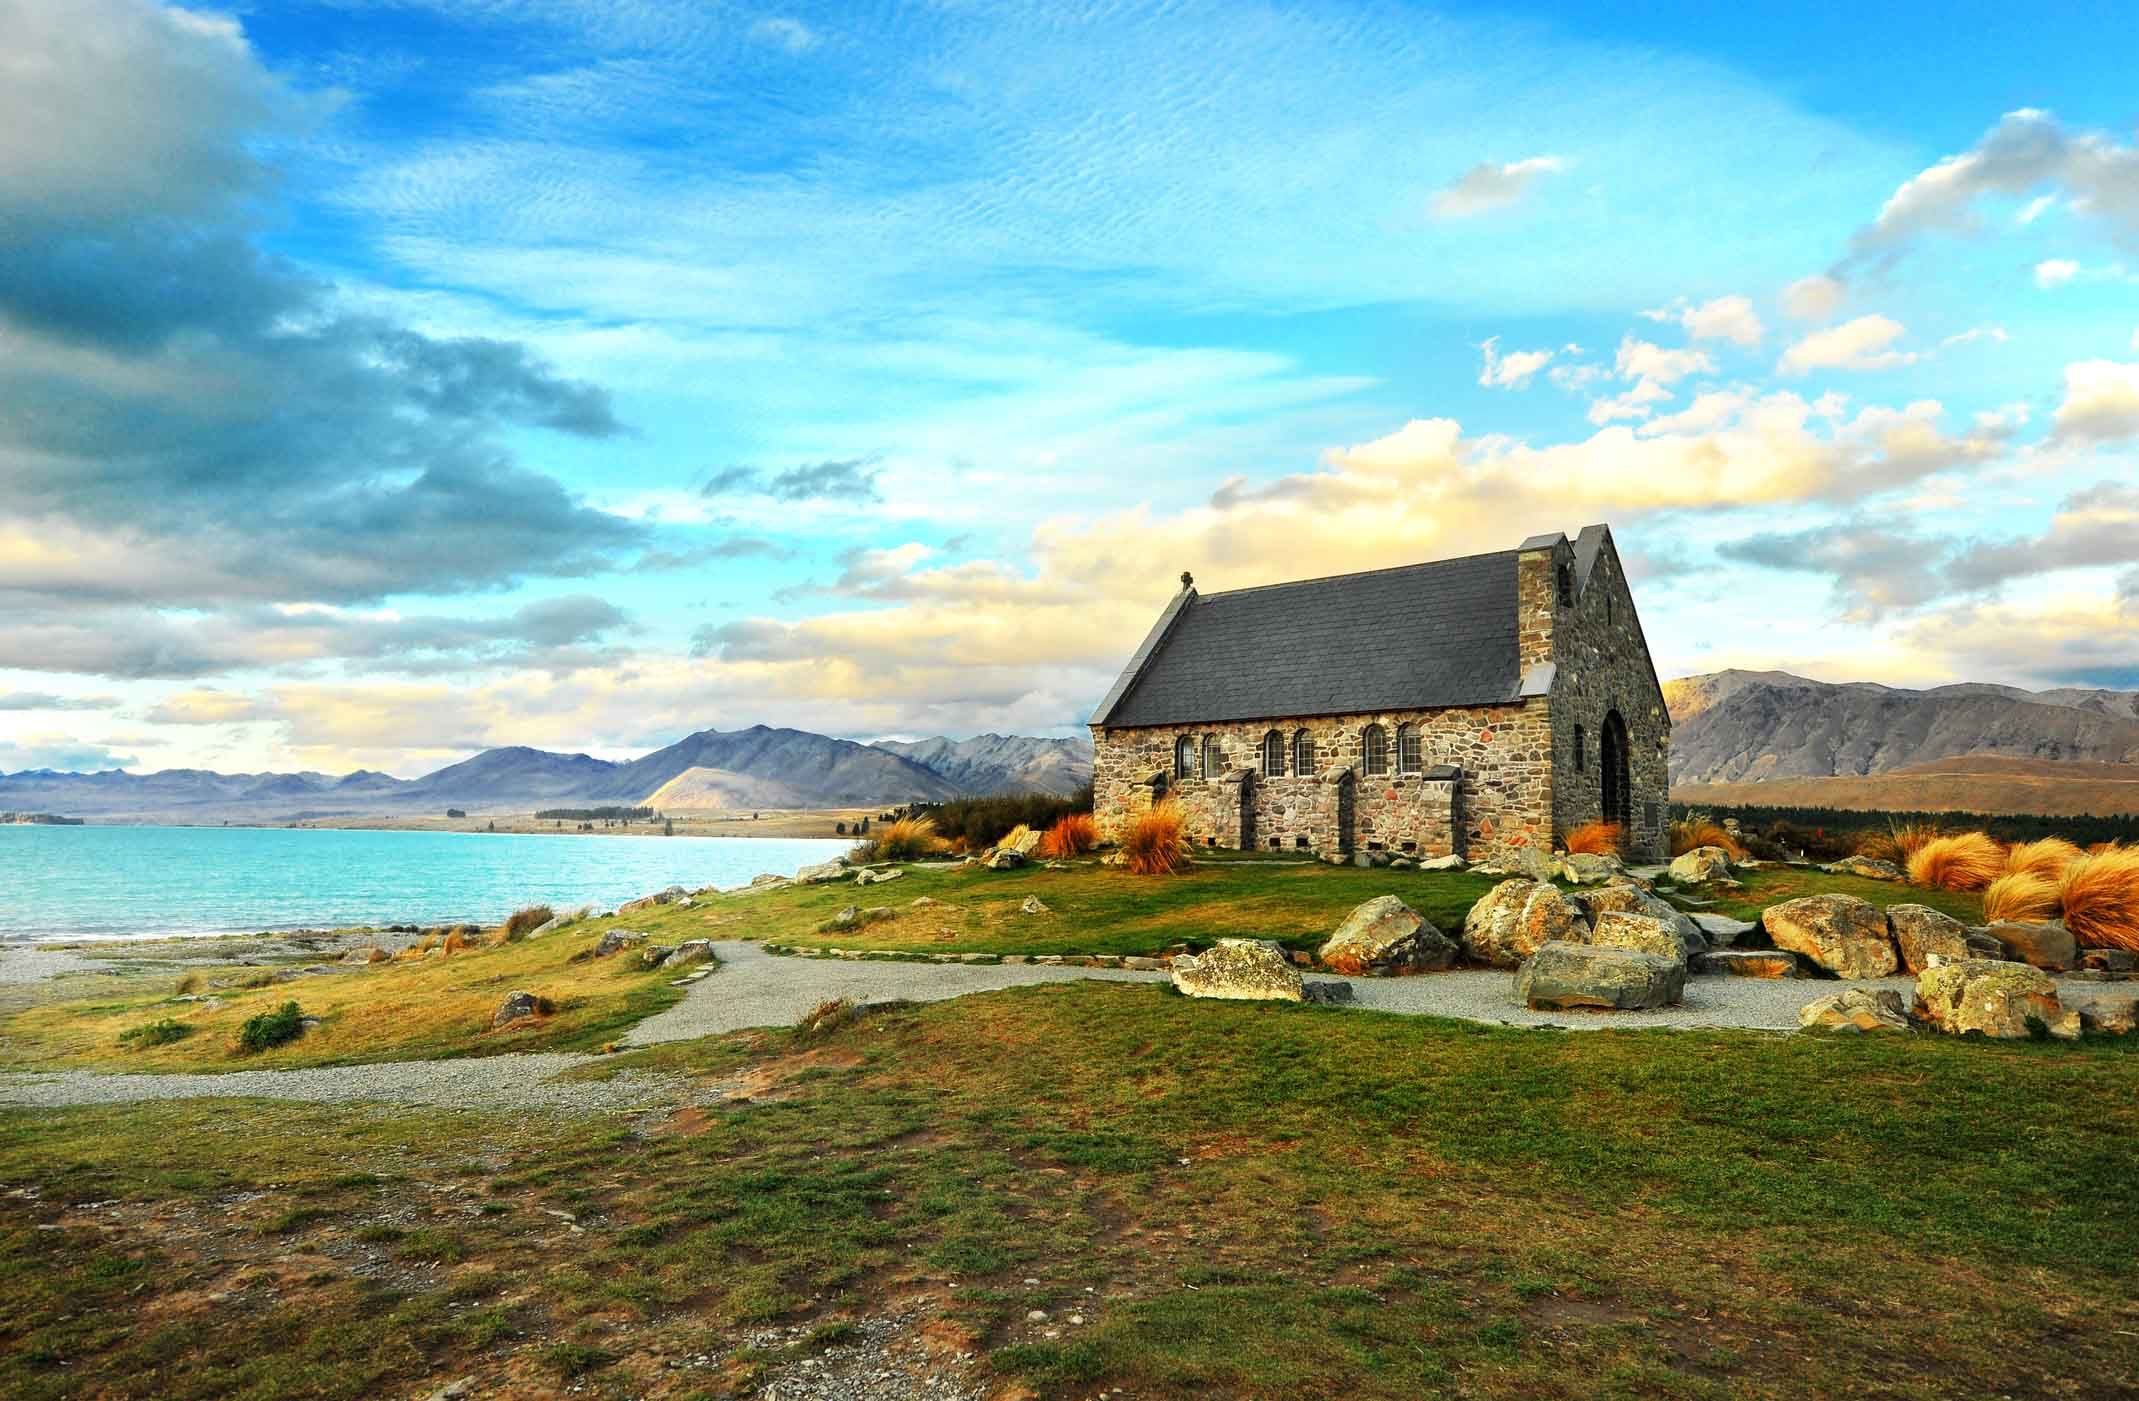 Church of the Good Shepherd at Lake Tekapo, New Zealand